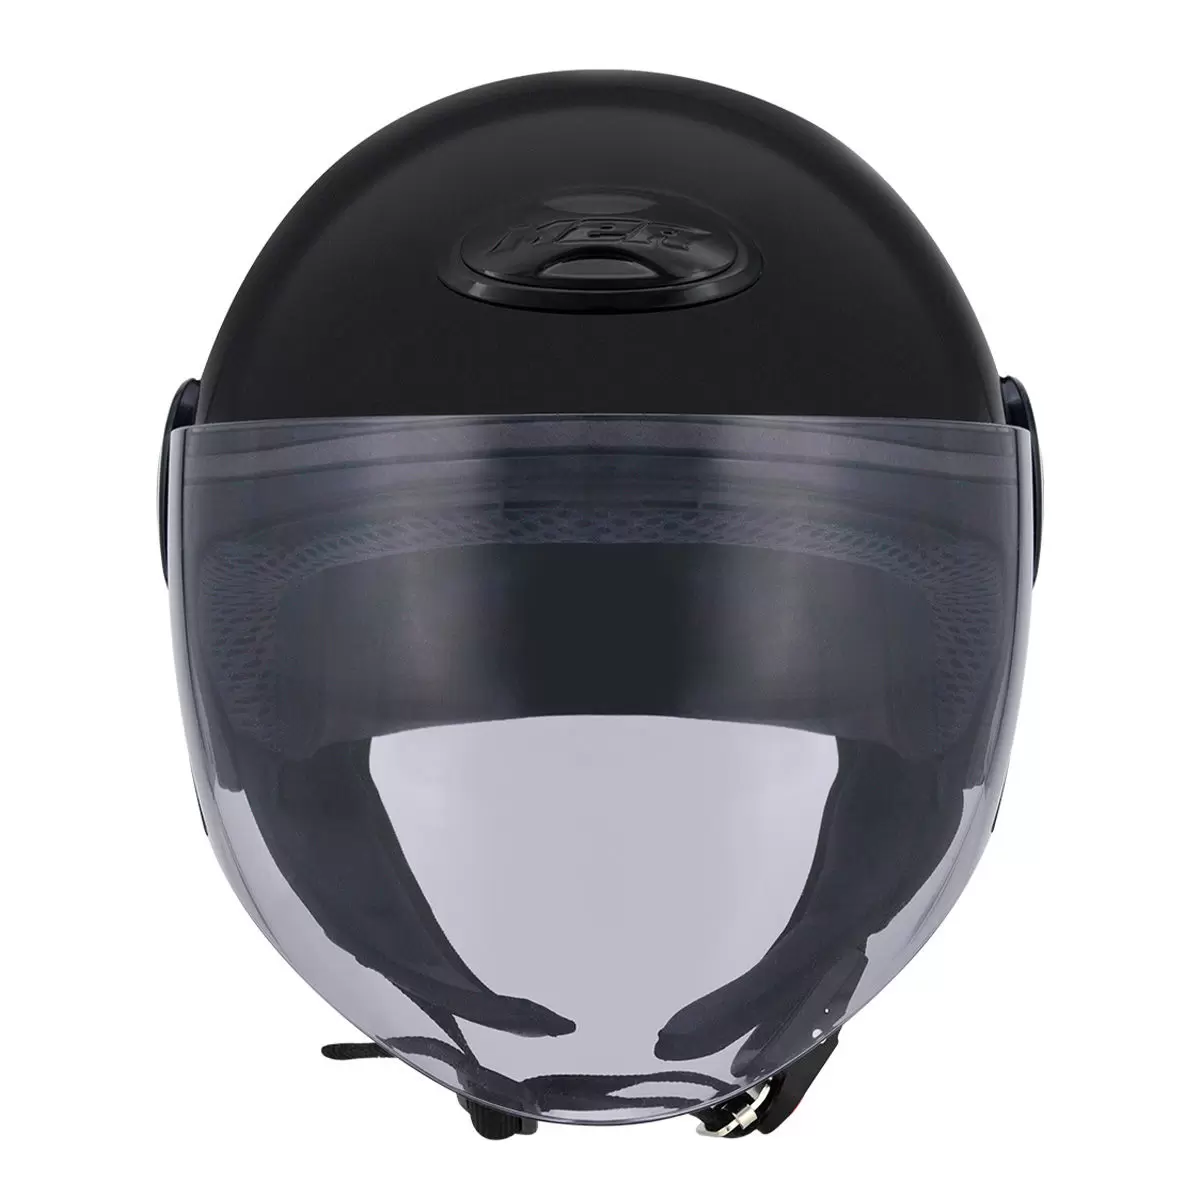 M2R 1/2罩安全帽 騎乘機車用防護頭盔 M-506 亮黑 XXL